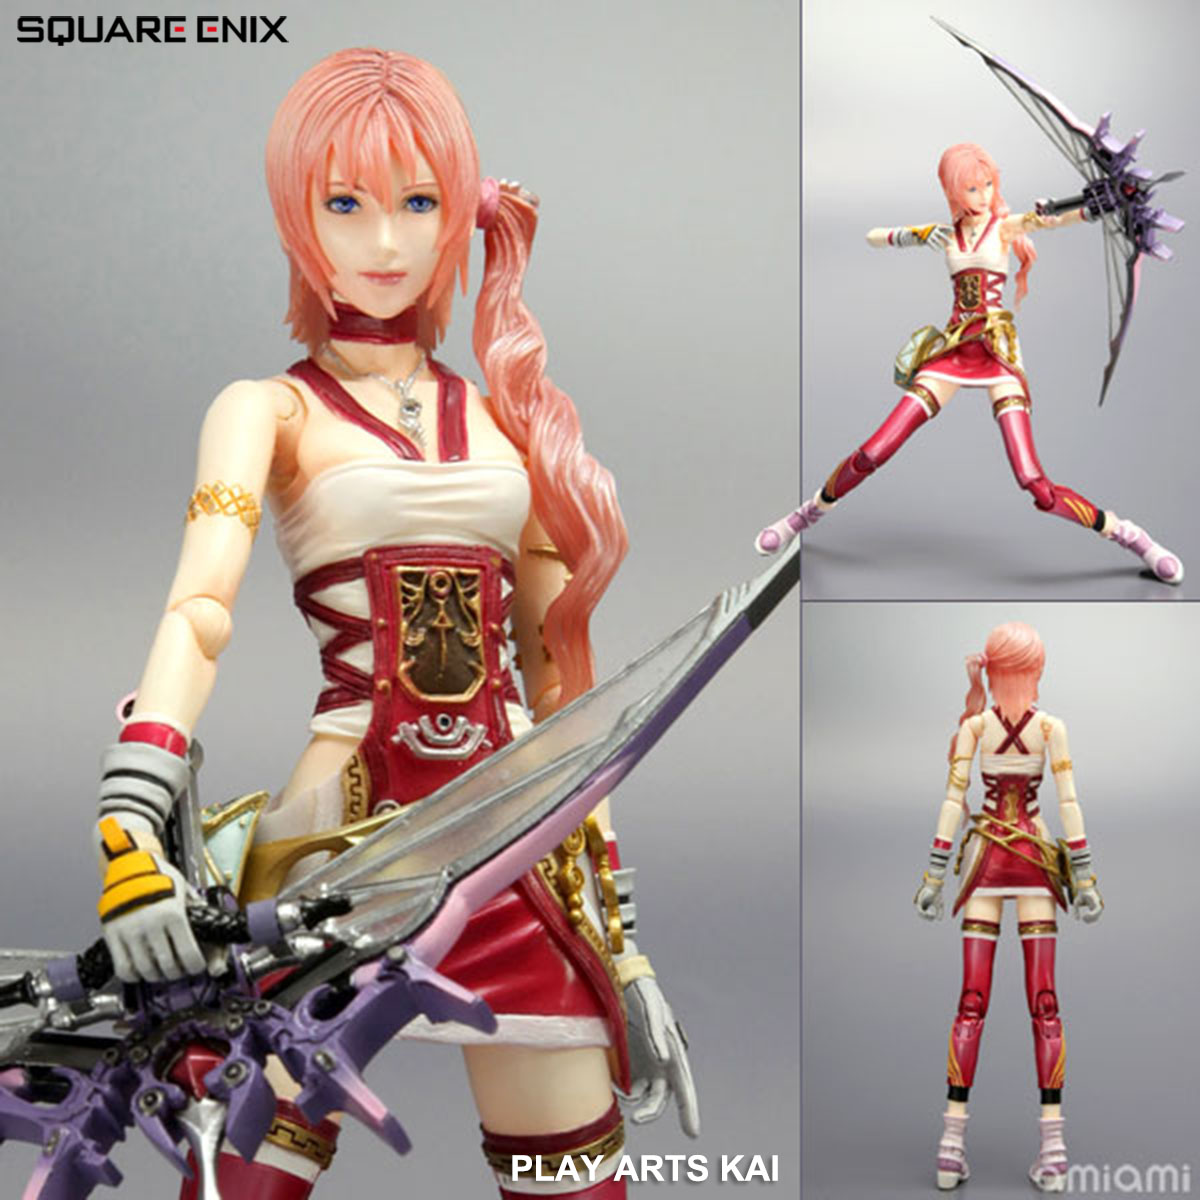 Model โมเดล งานแท้ 100% Square Enix Play Arts Kai Final Fantasy XIII 2 ไฟนอลแฟนตาซี ไลท์นิ่งรีเทิร์นส์ Serah Farron เซราห์ ฟาร์รอน Ver Figma ฟิกม่า Anime ขยับแขน-ขาได้ ของขวัญ Gift อนิเมะ การ์ตูน มังงะ สั่งและนำเข้าจากญี่ปุ่น manga Figure ฟิกเกอร์